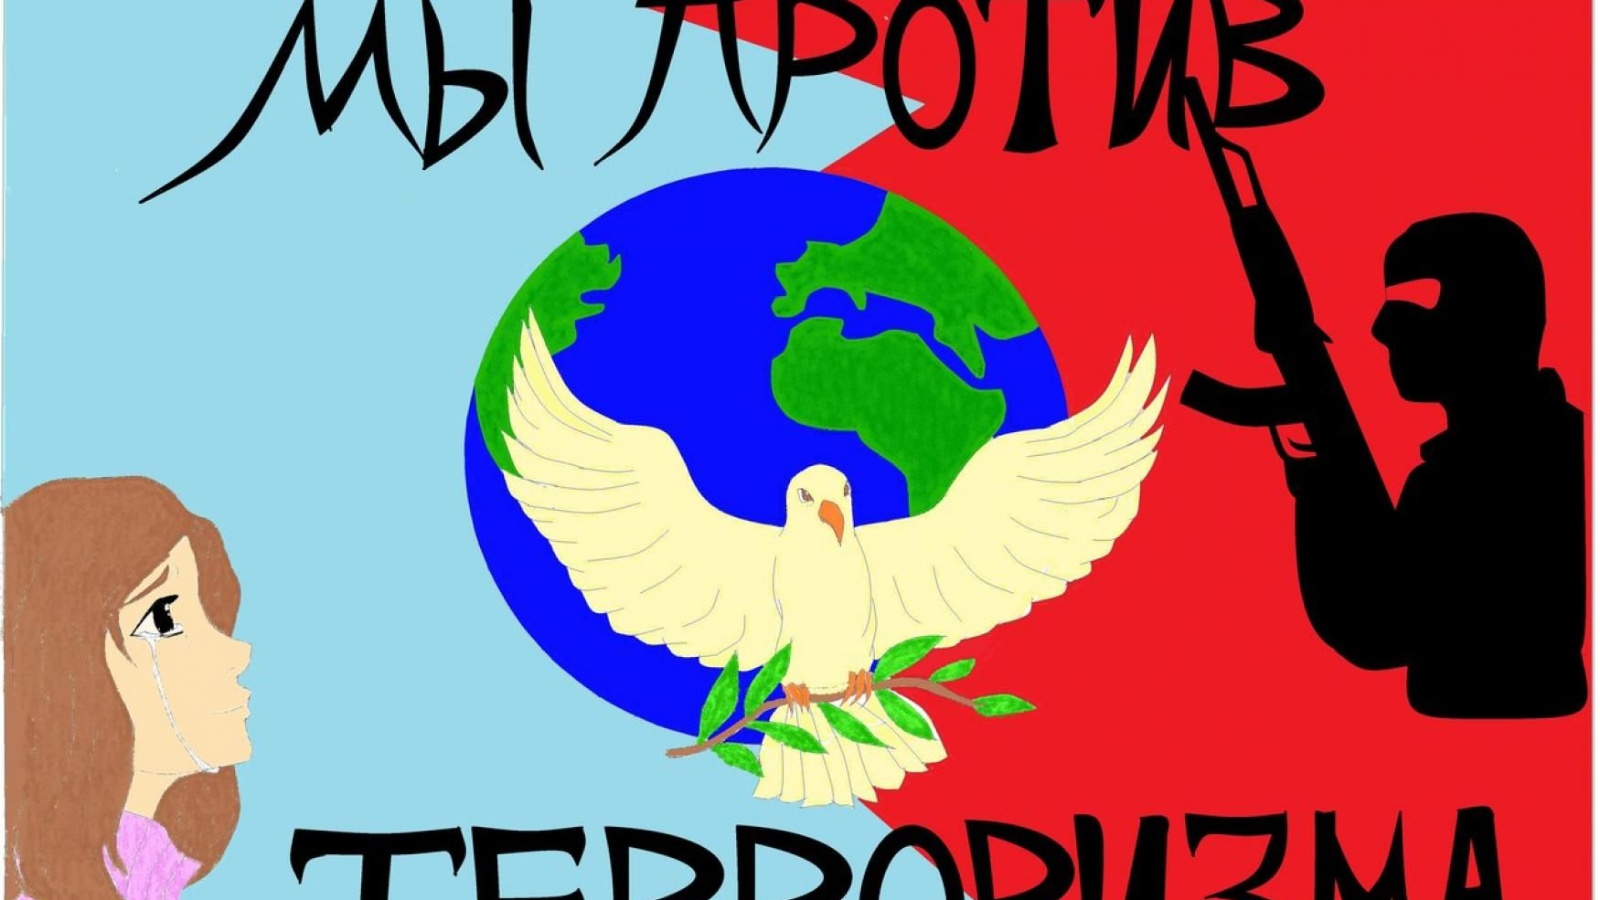 Мы против терроризма